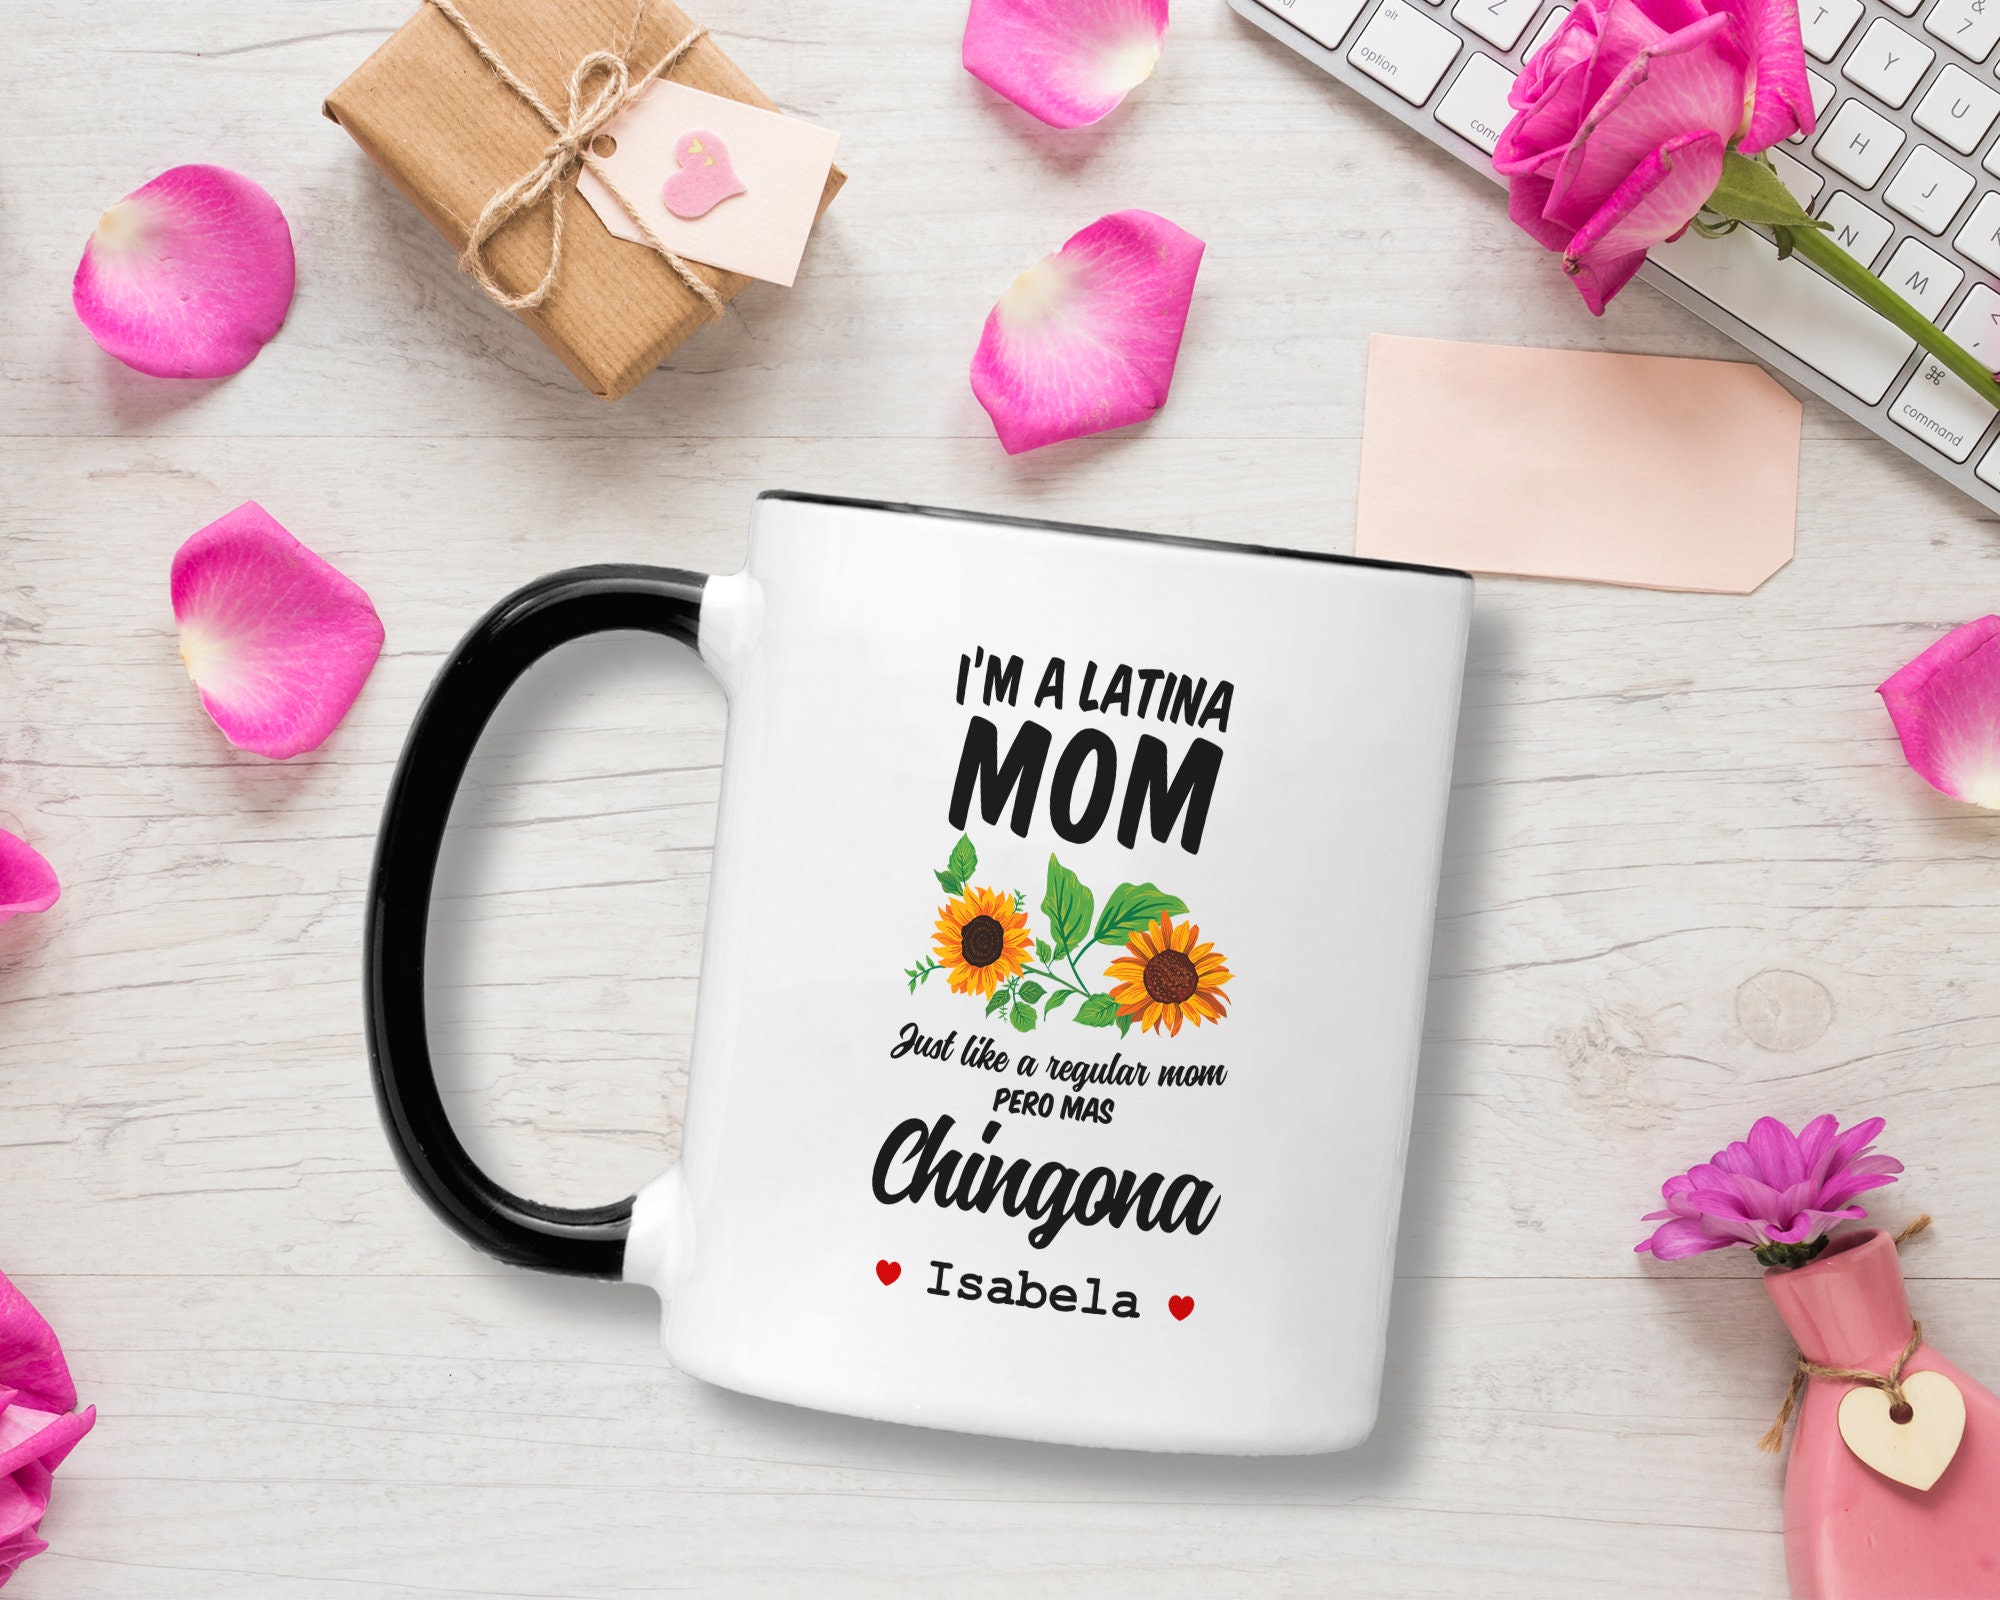 Womens La Mama Mas Chingona Cute Heart Spanish Mom Womens Gifts Hoodie